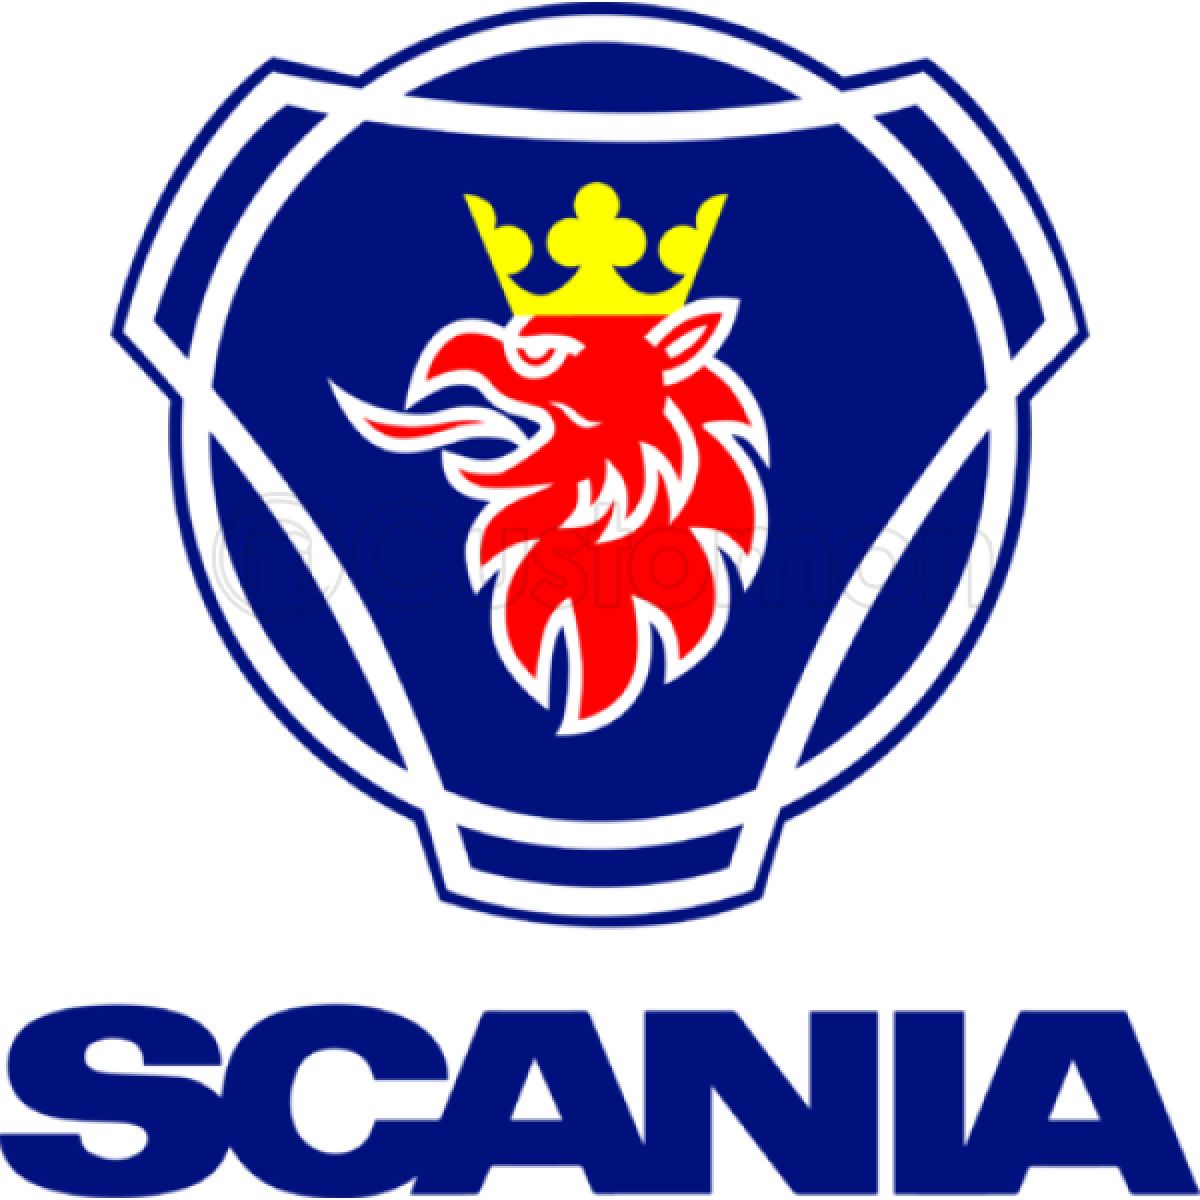 Scania эмблема. Герб Скания. Скания логотип вектор. Надпись Скания. Логотип скания